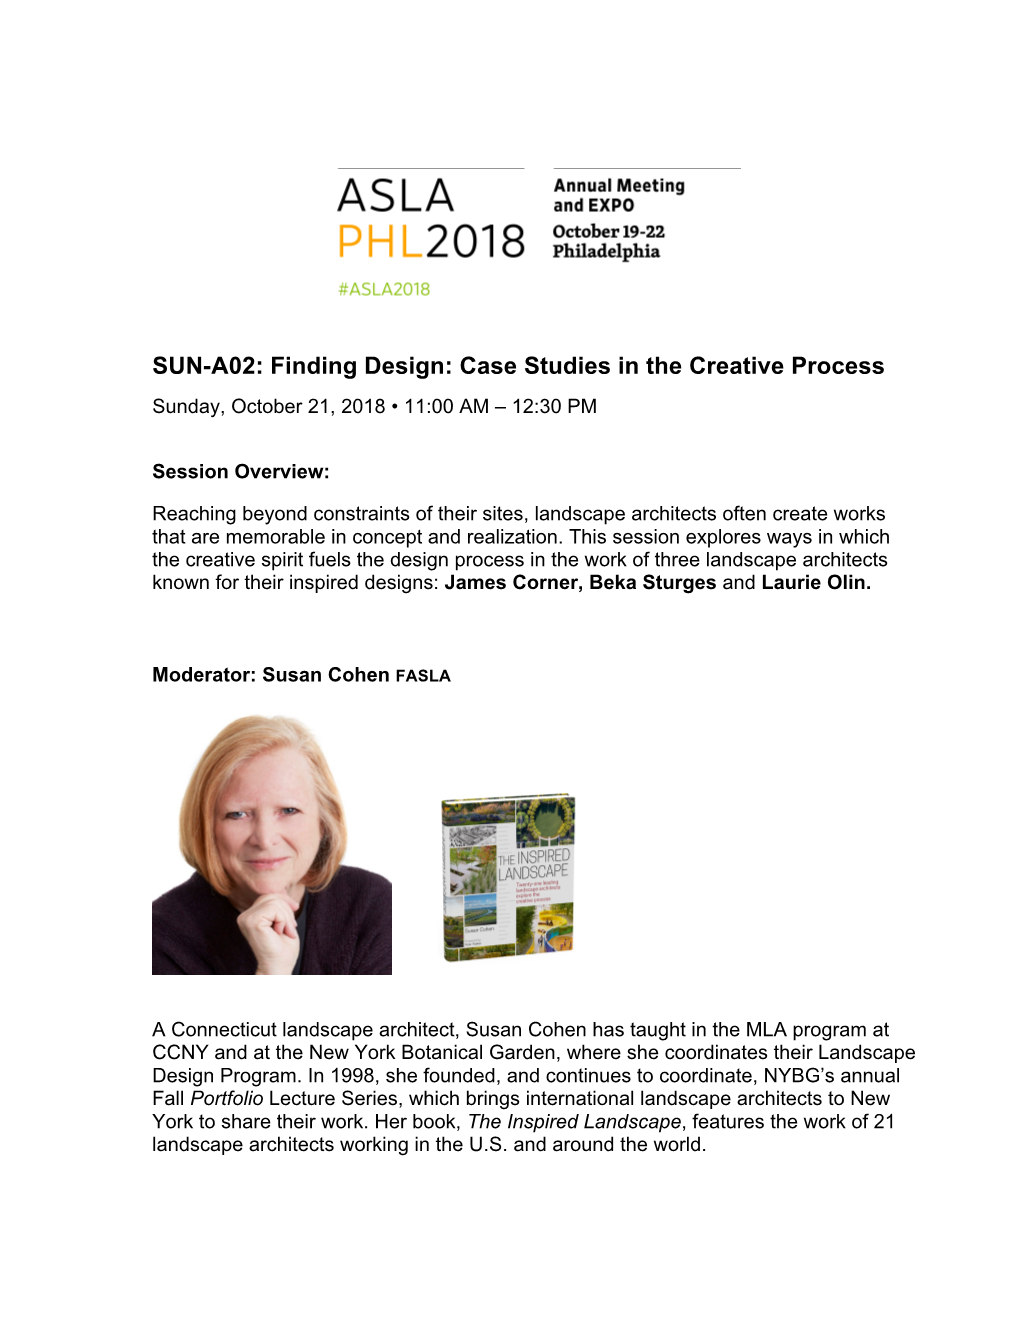 SUN-A02: Finding Design: Case Studies in the Creative Process